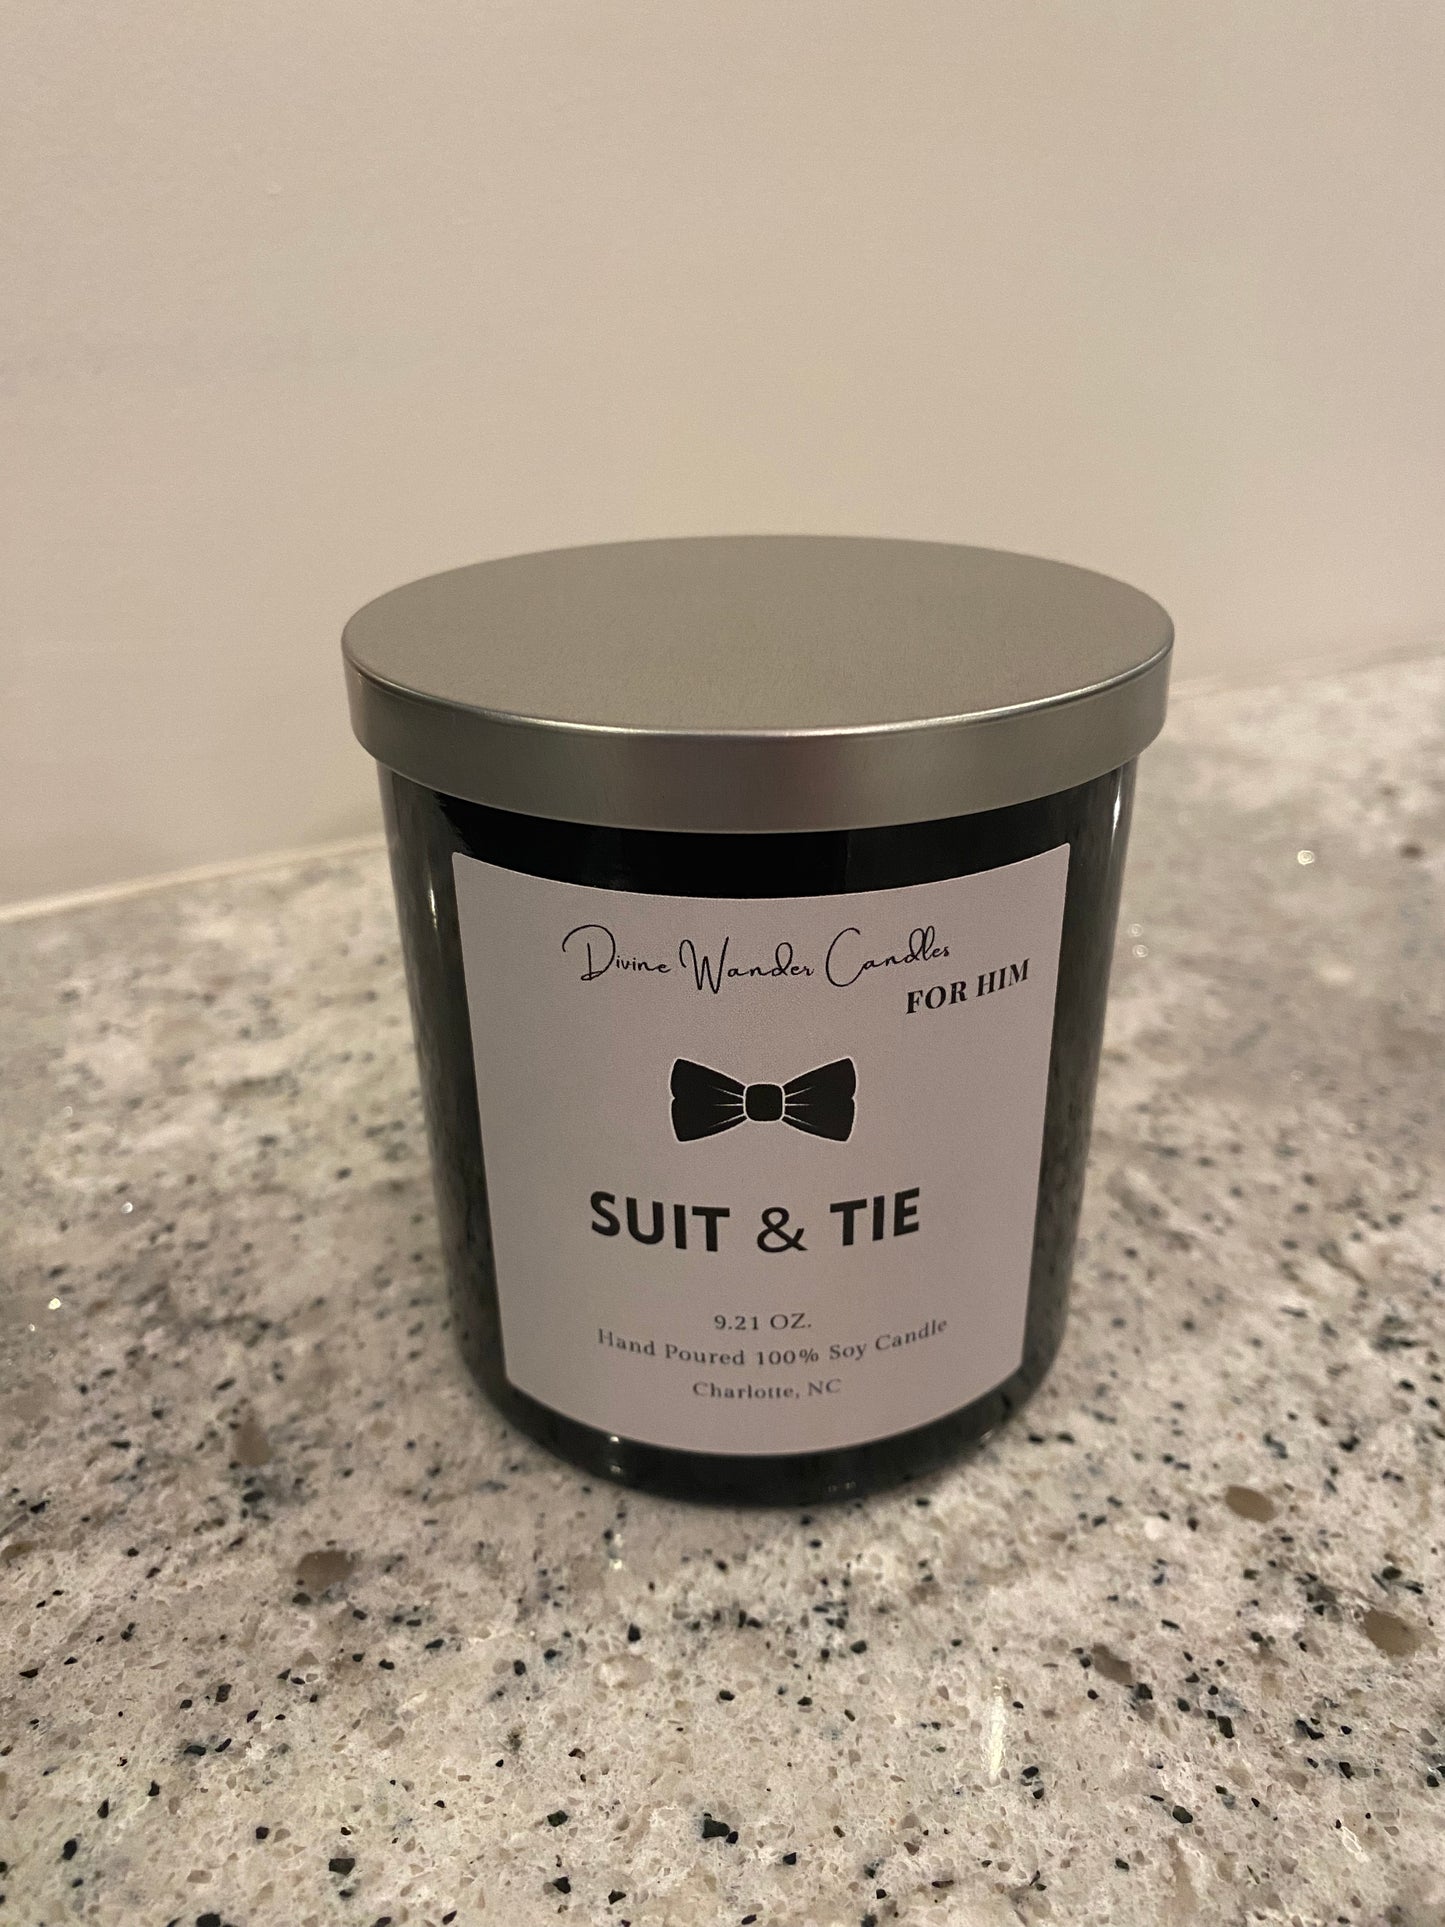 "Suit & Tie"